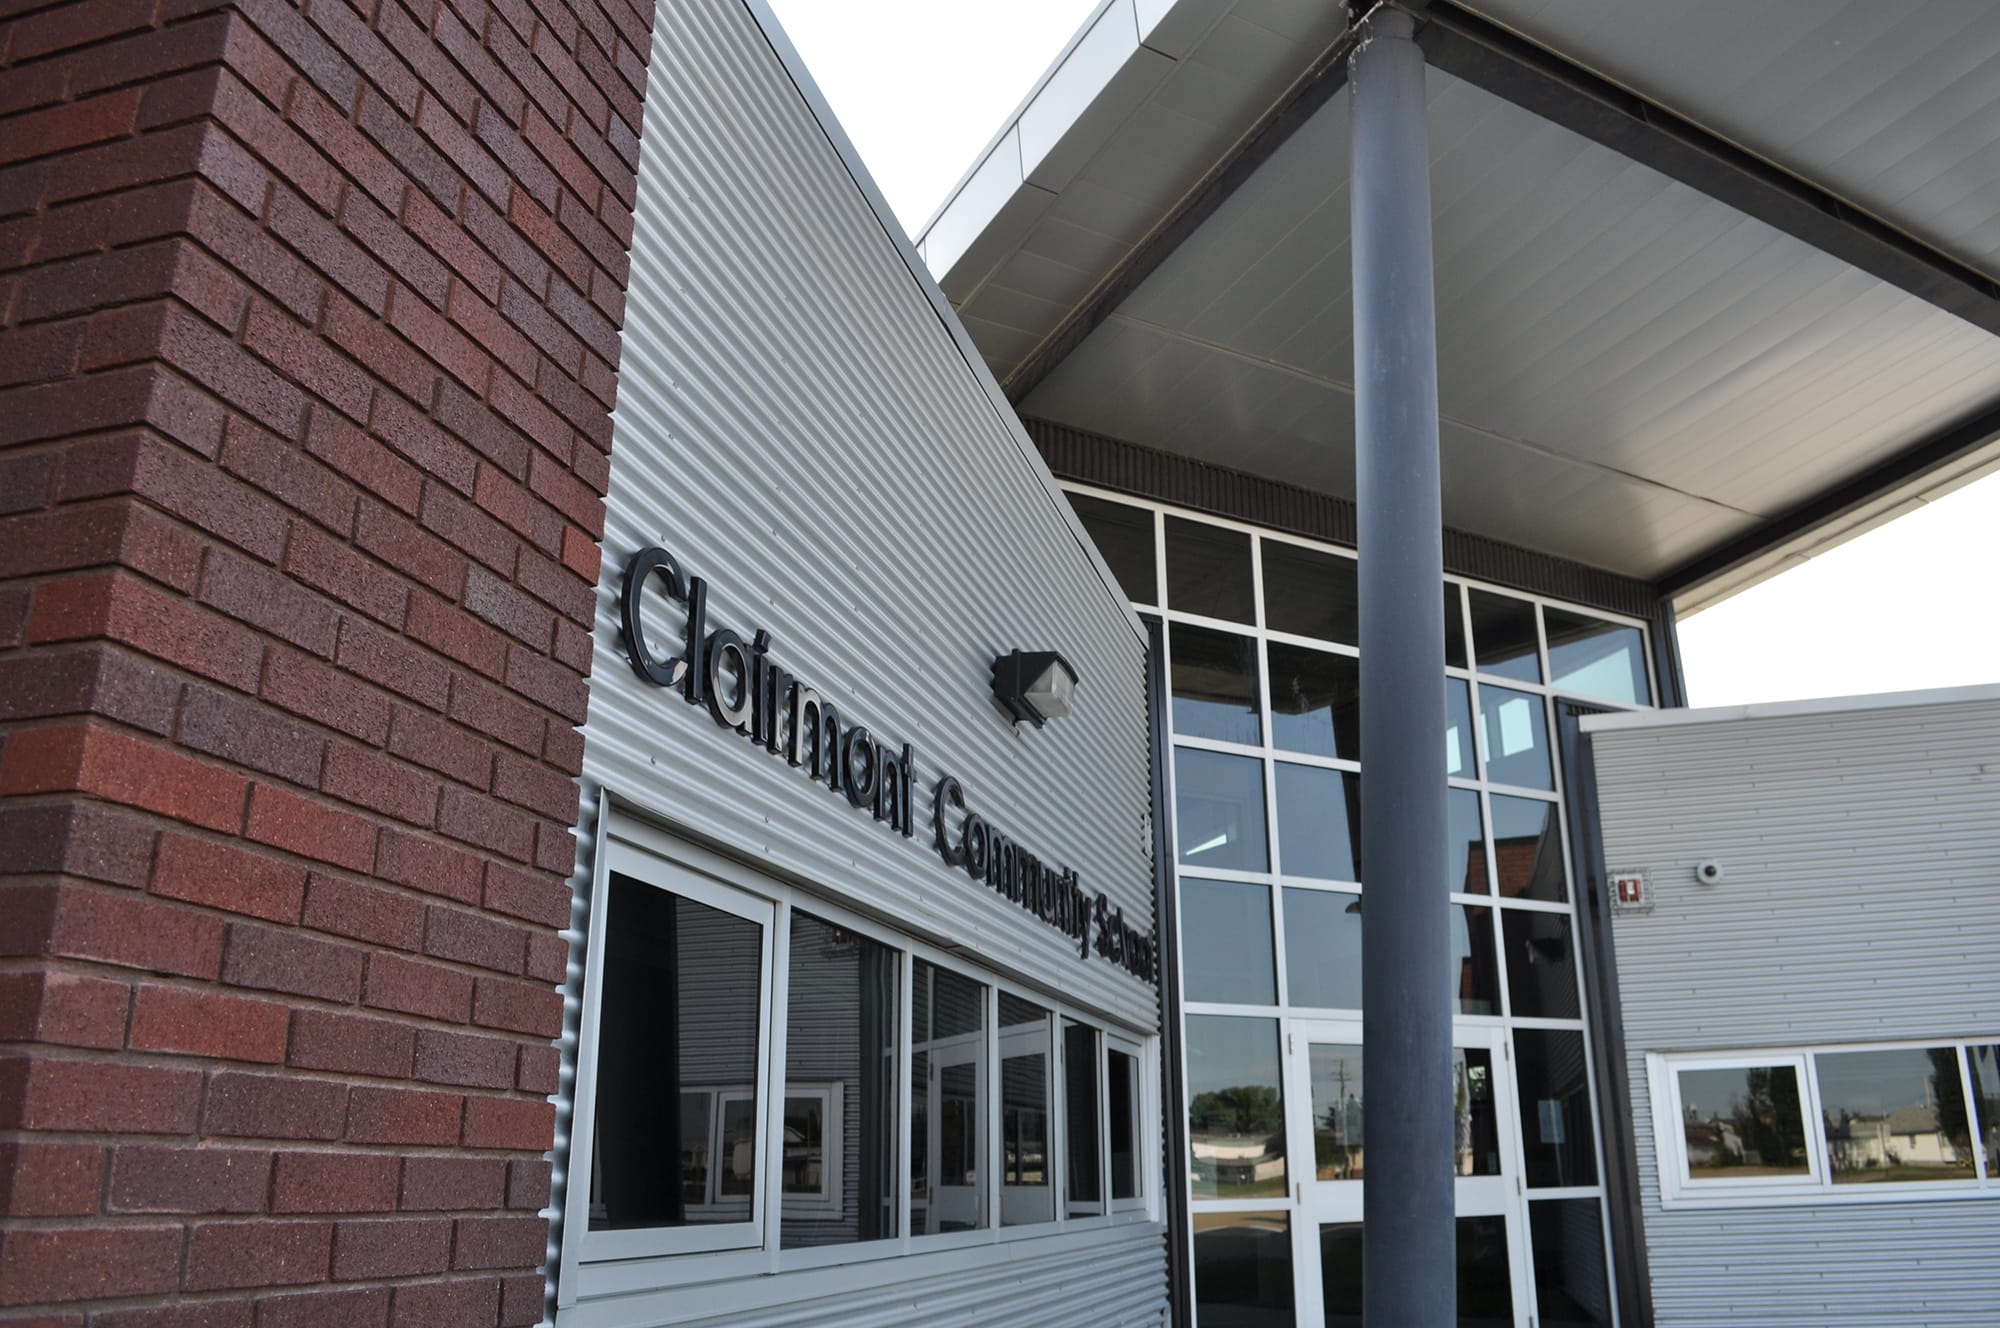 Clairmont Community School and Wellington Resource Centre exterior